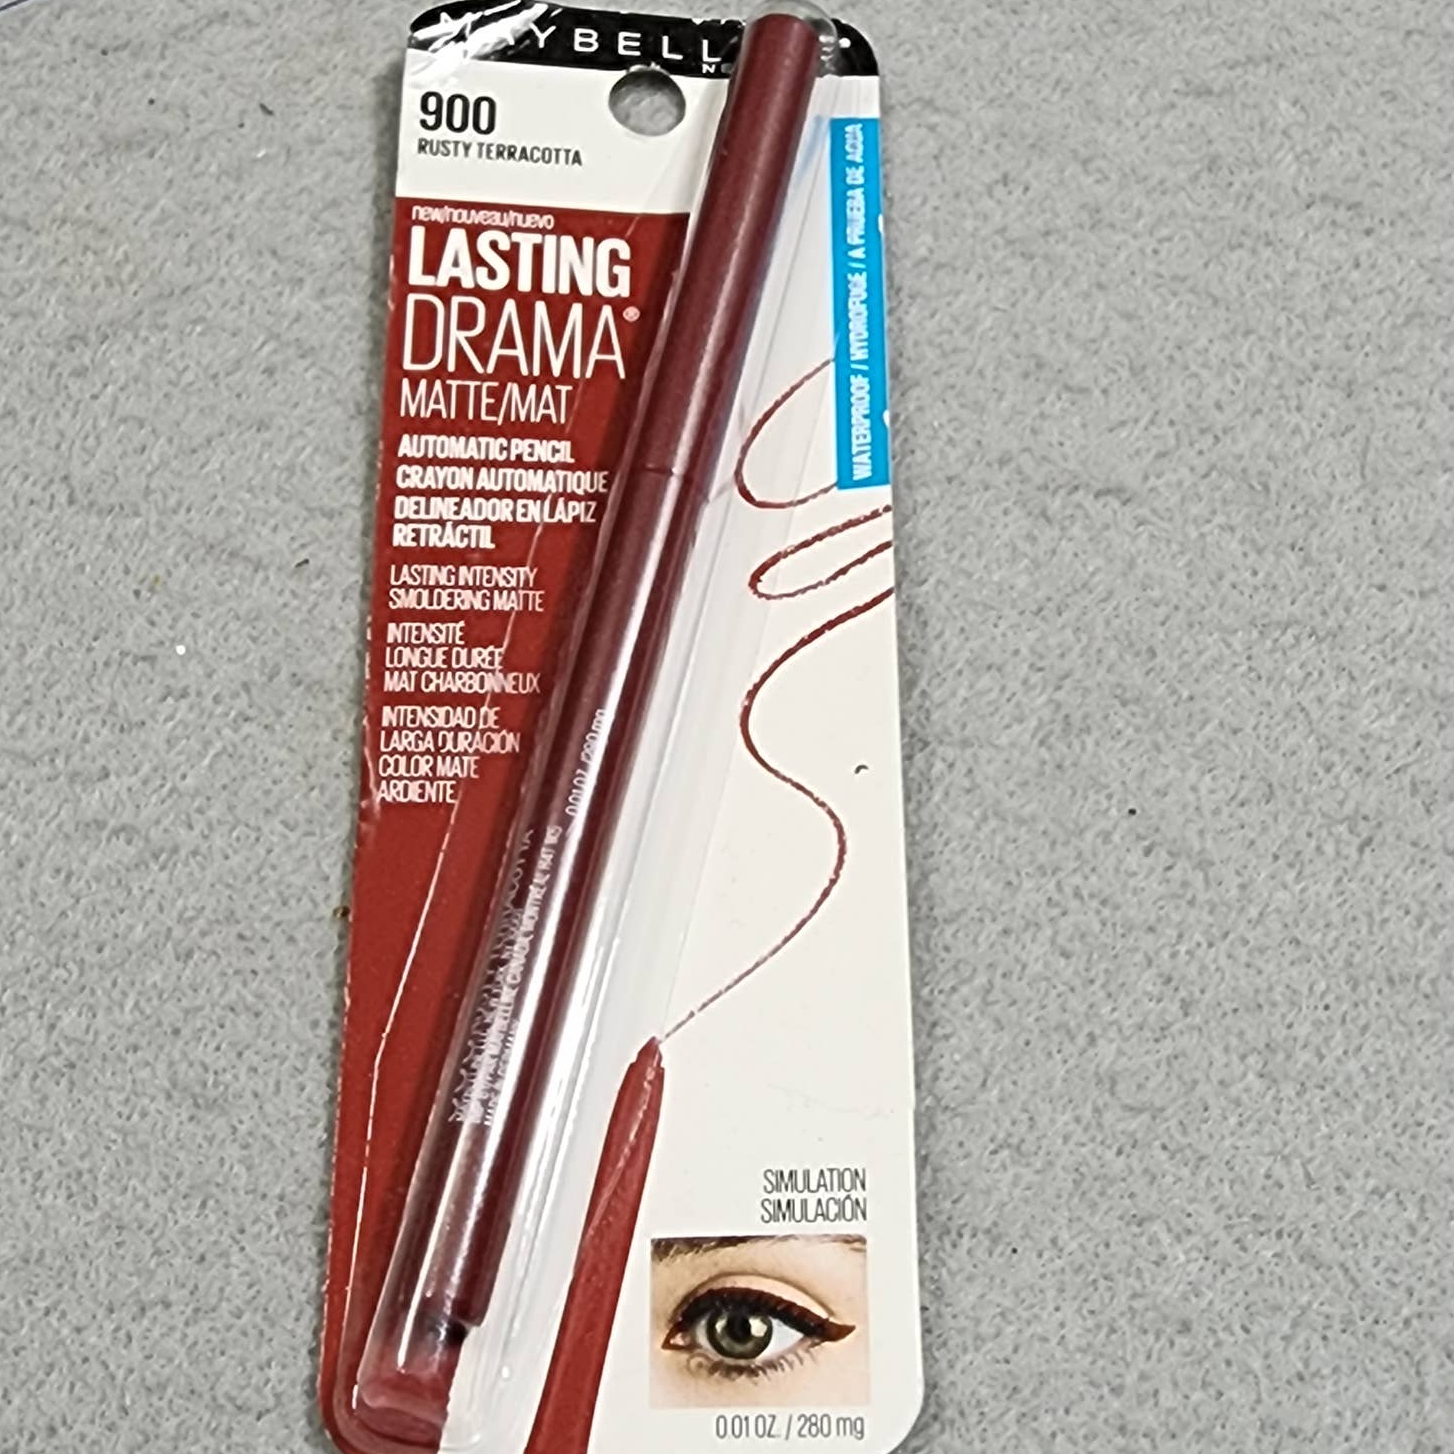 Maybelline Lasting Drama 900 RUSTY TERRACOTTA Matte Waterproof Eye Liner Sealed - $6.35